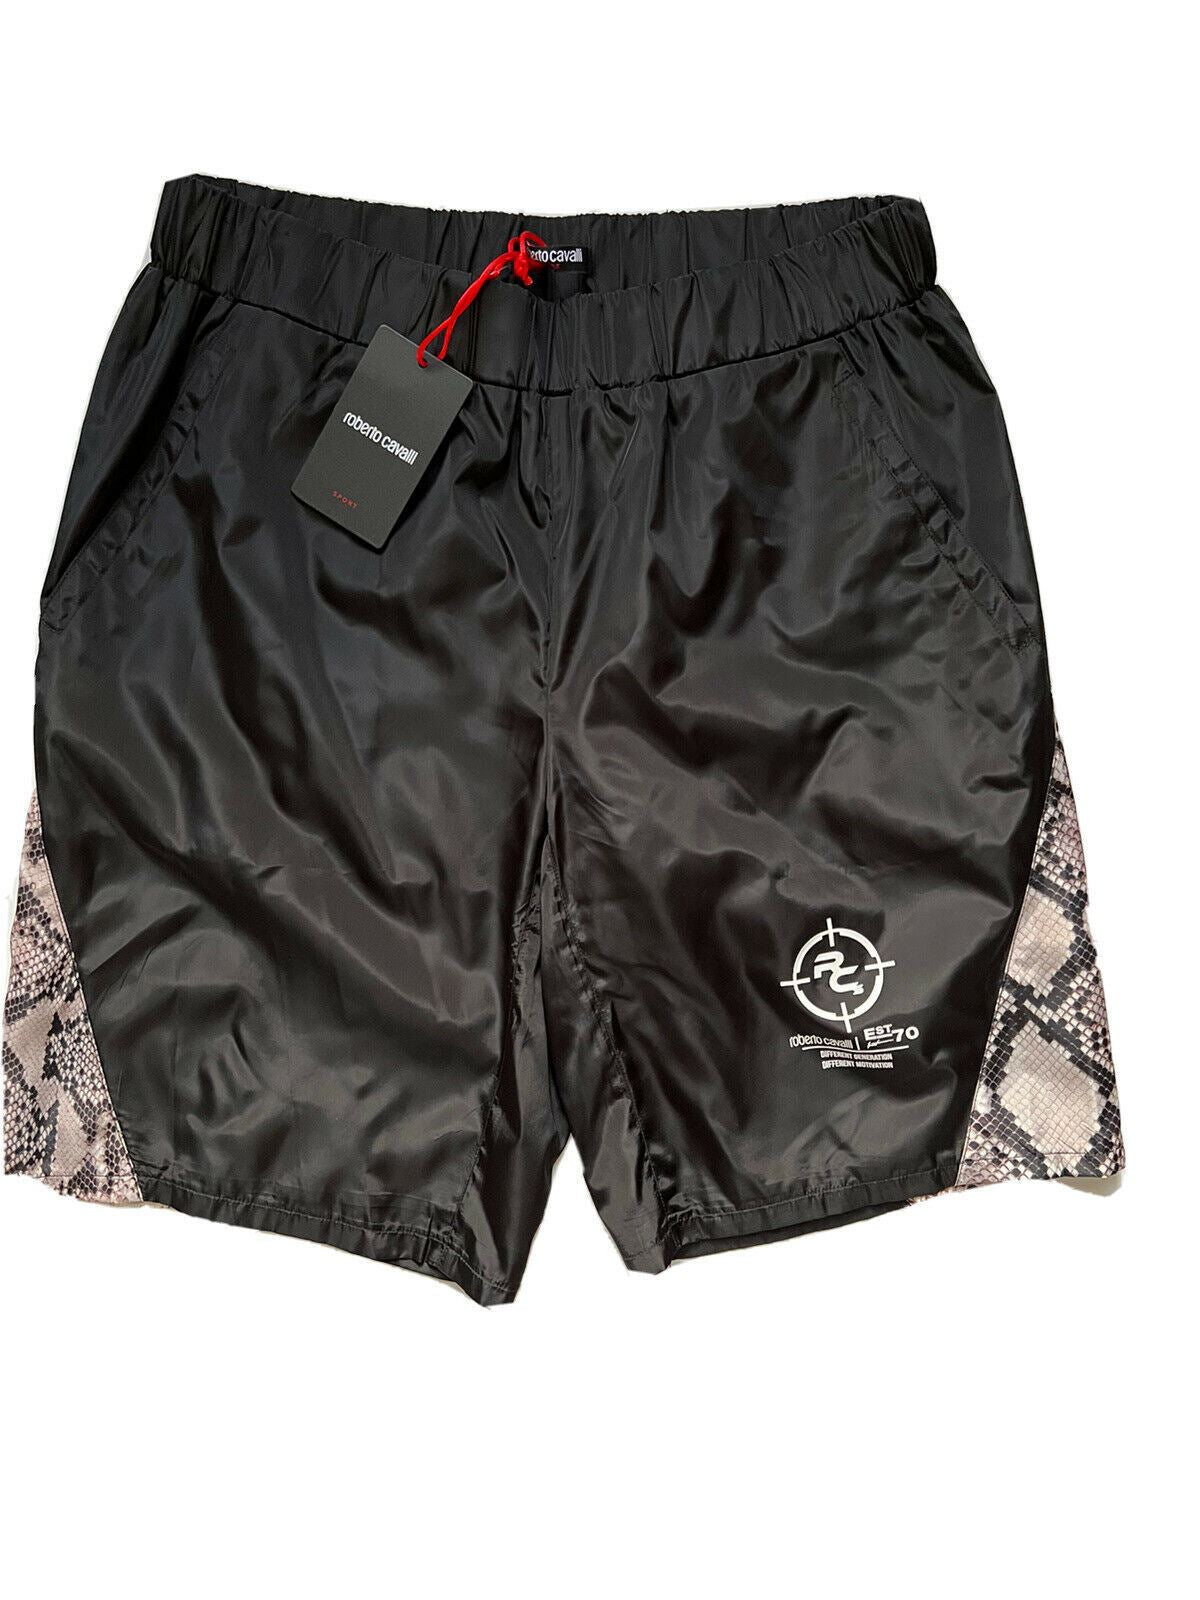 NWT $440 Roberto Cavalli Men's Black Swimsuit Shorts Size XL